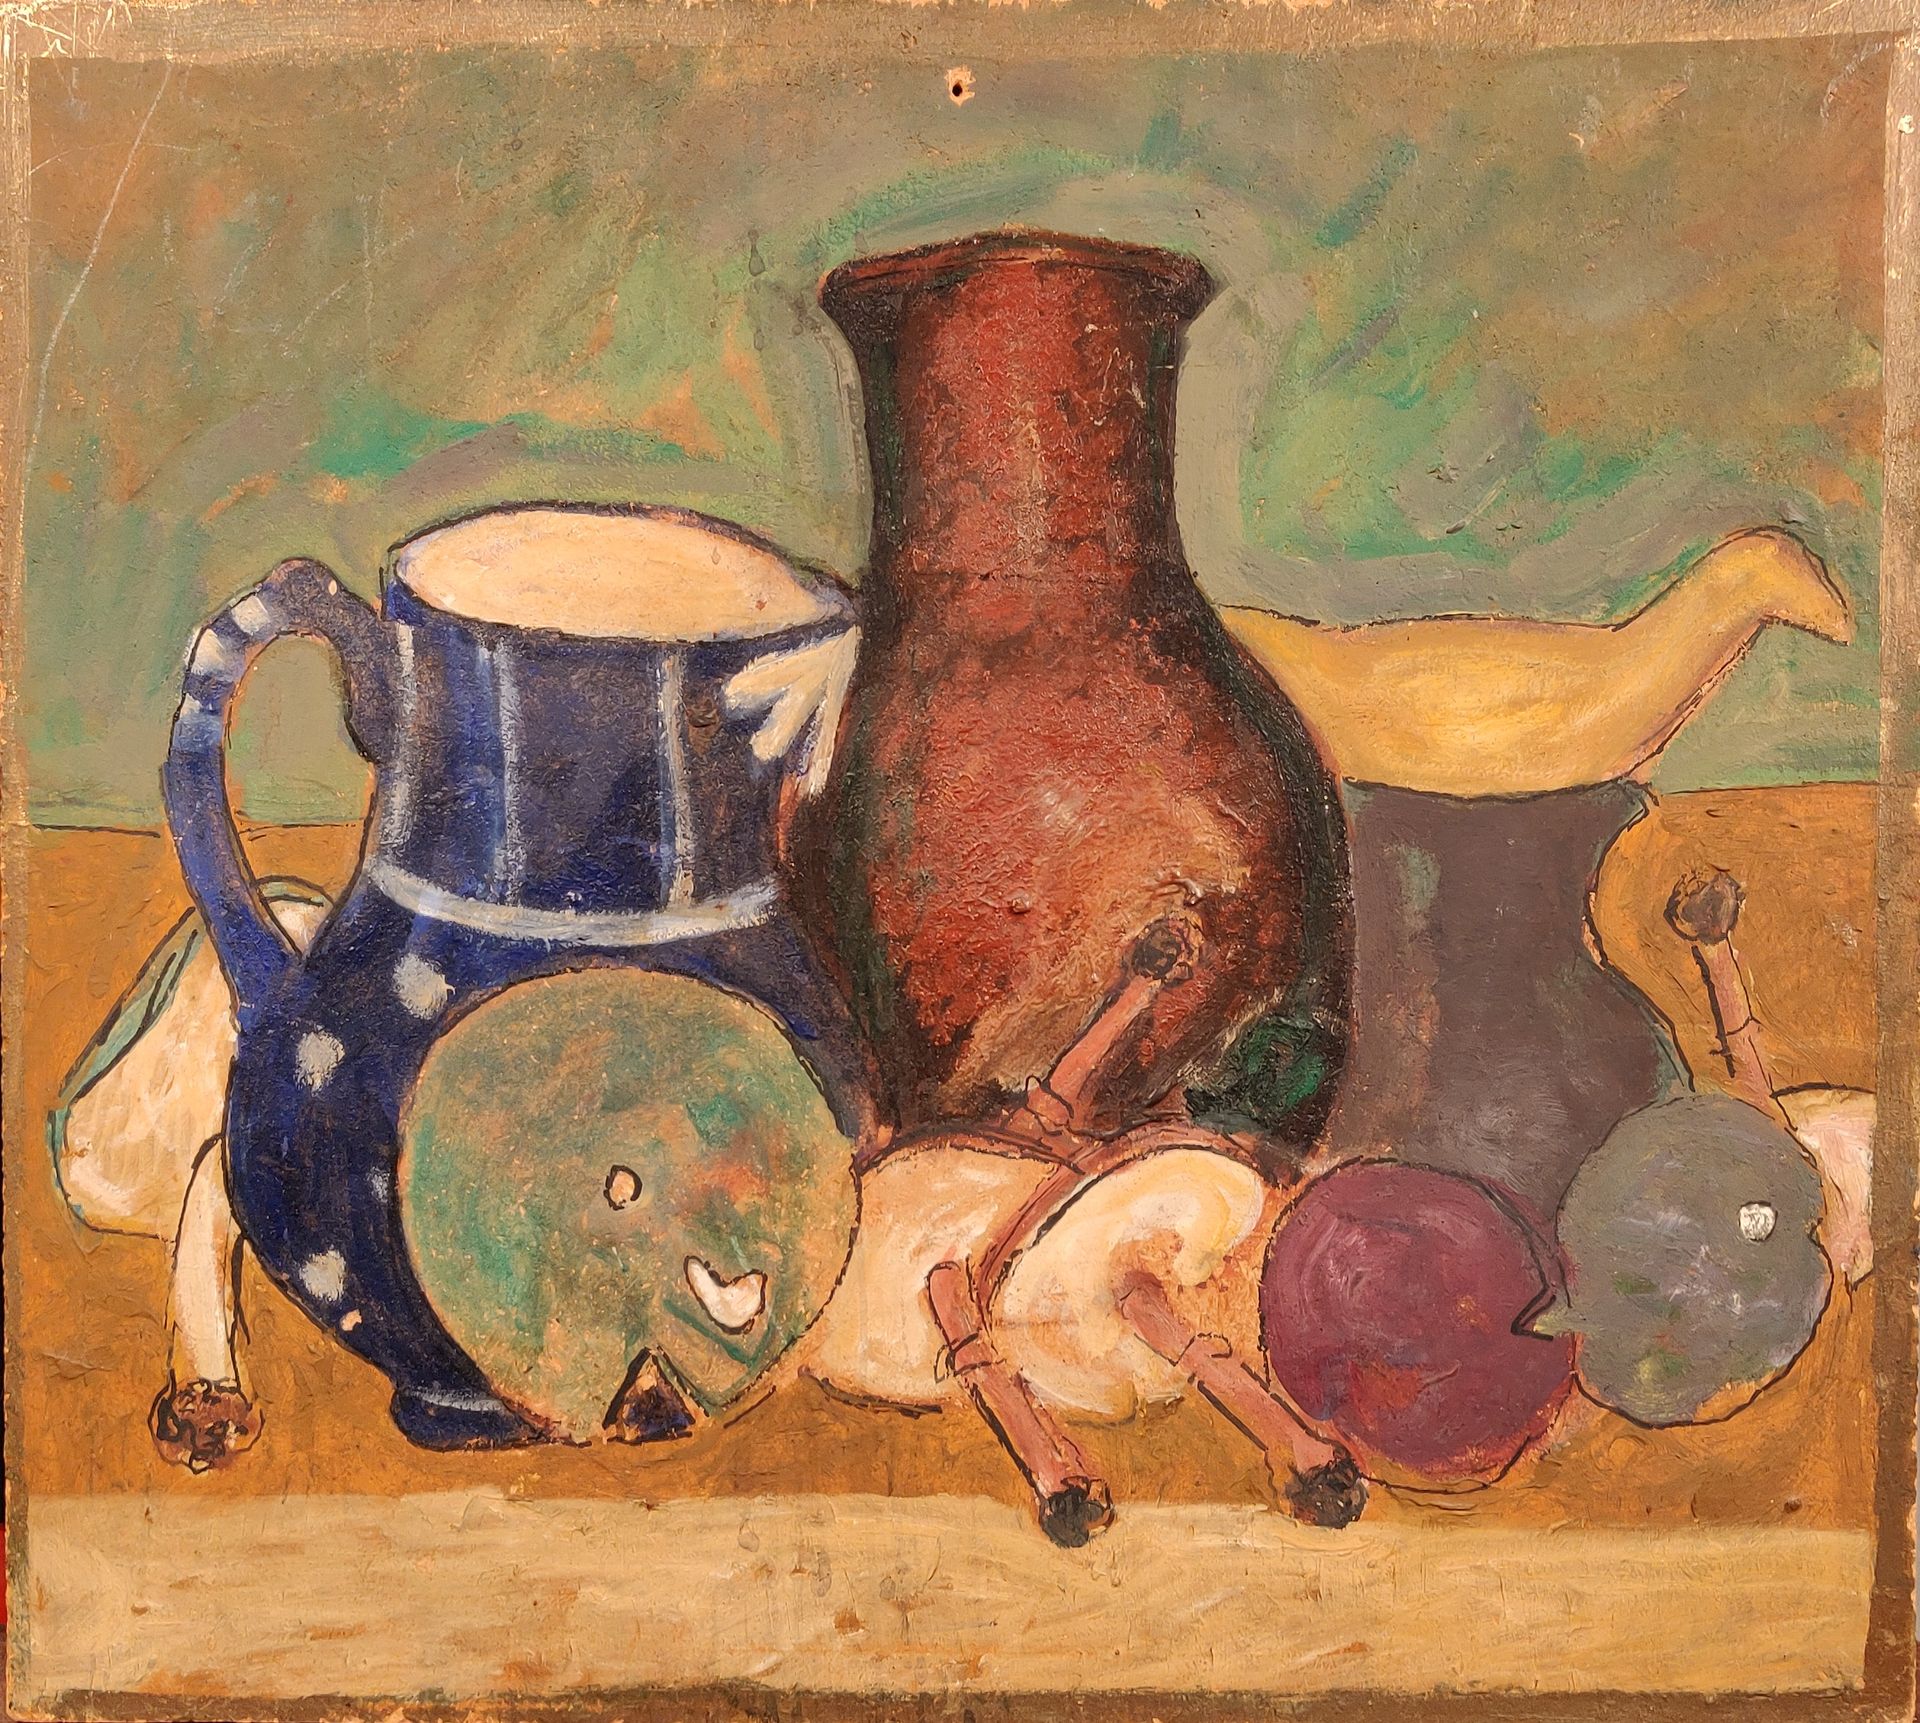 Null 马塞尔-米格诺（Marcel MIGNOT） (1891-1975)

一共有8件作品，包括:

- 静物与水壶，板面油画，无签名，36 x 40厘米&hellip;